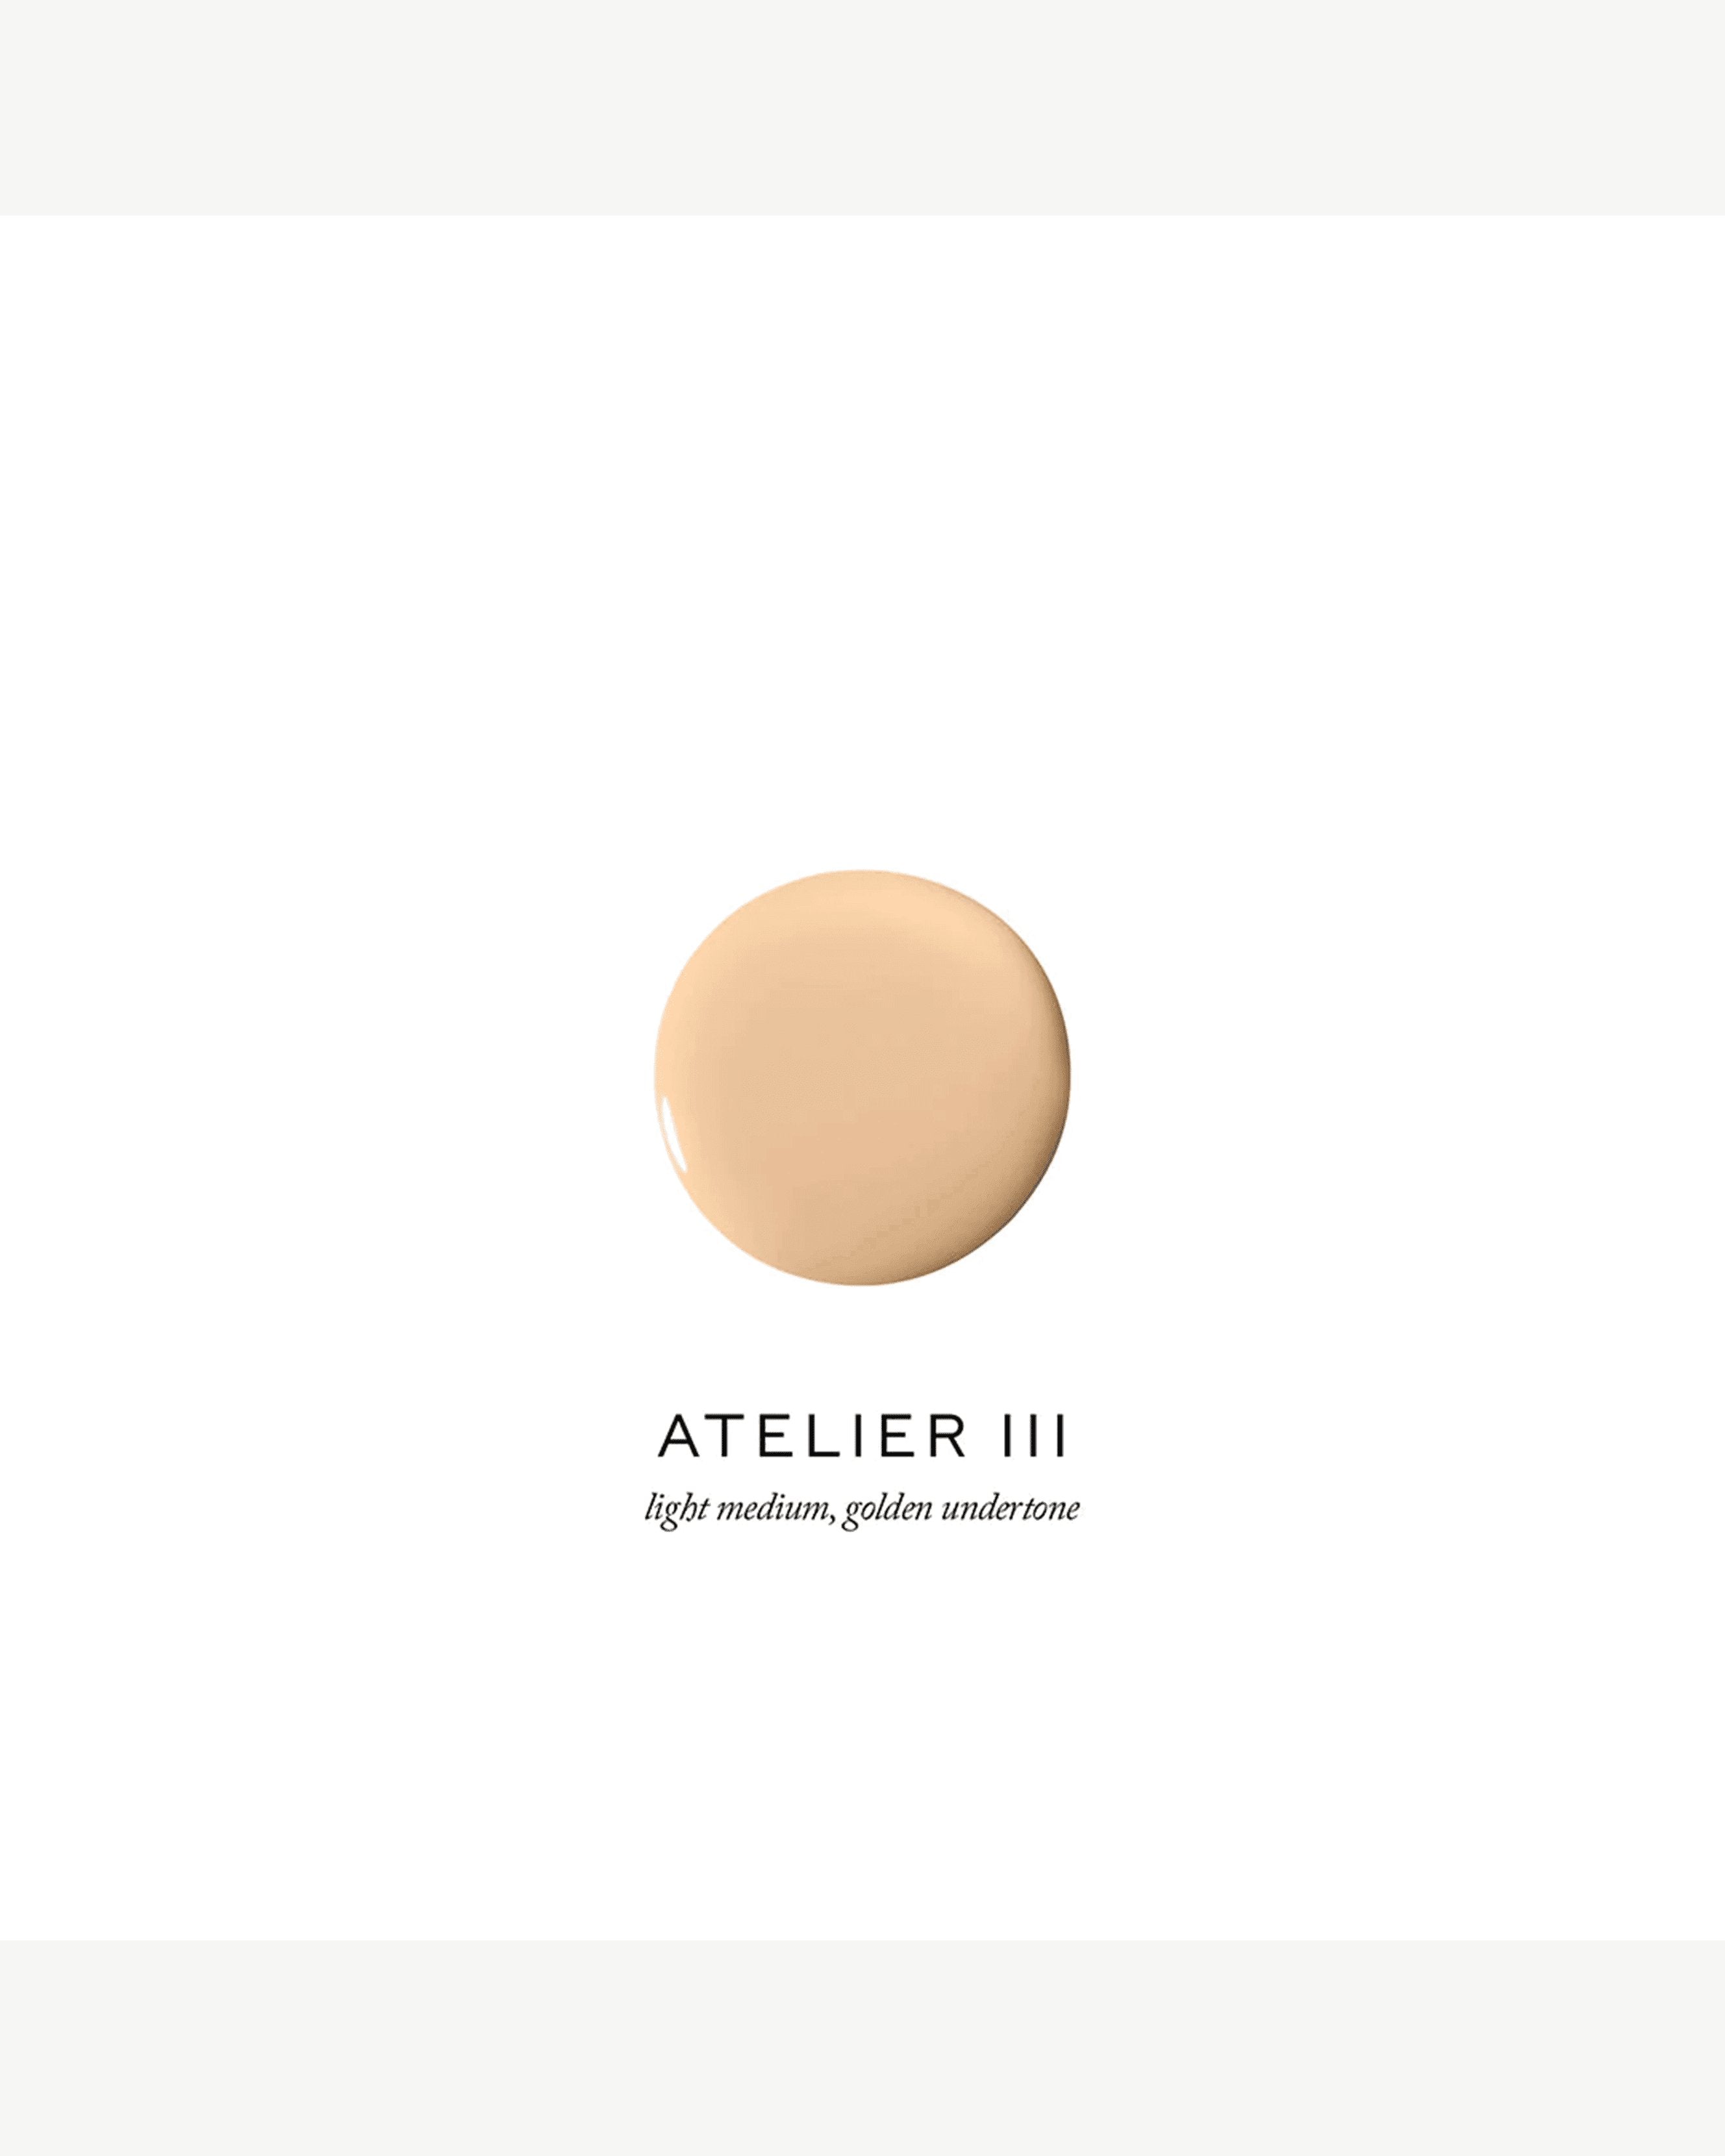 Atelier III (light medium, golden undertone)